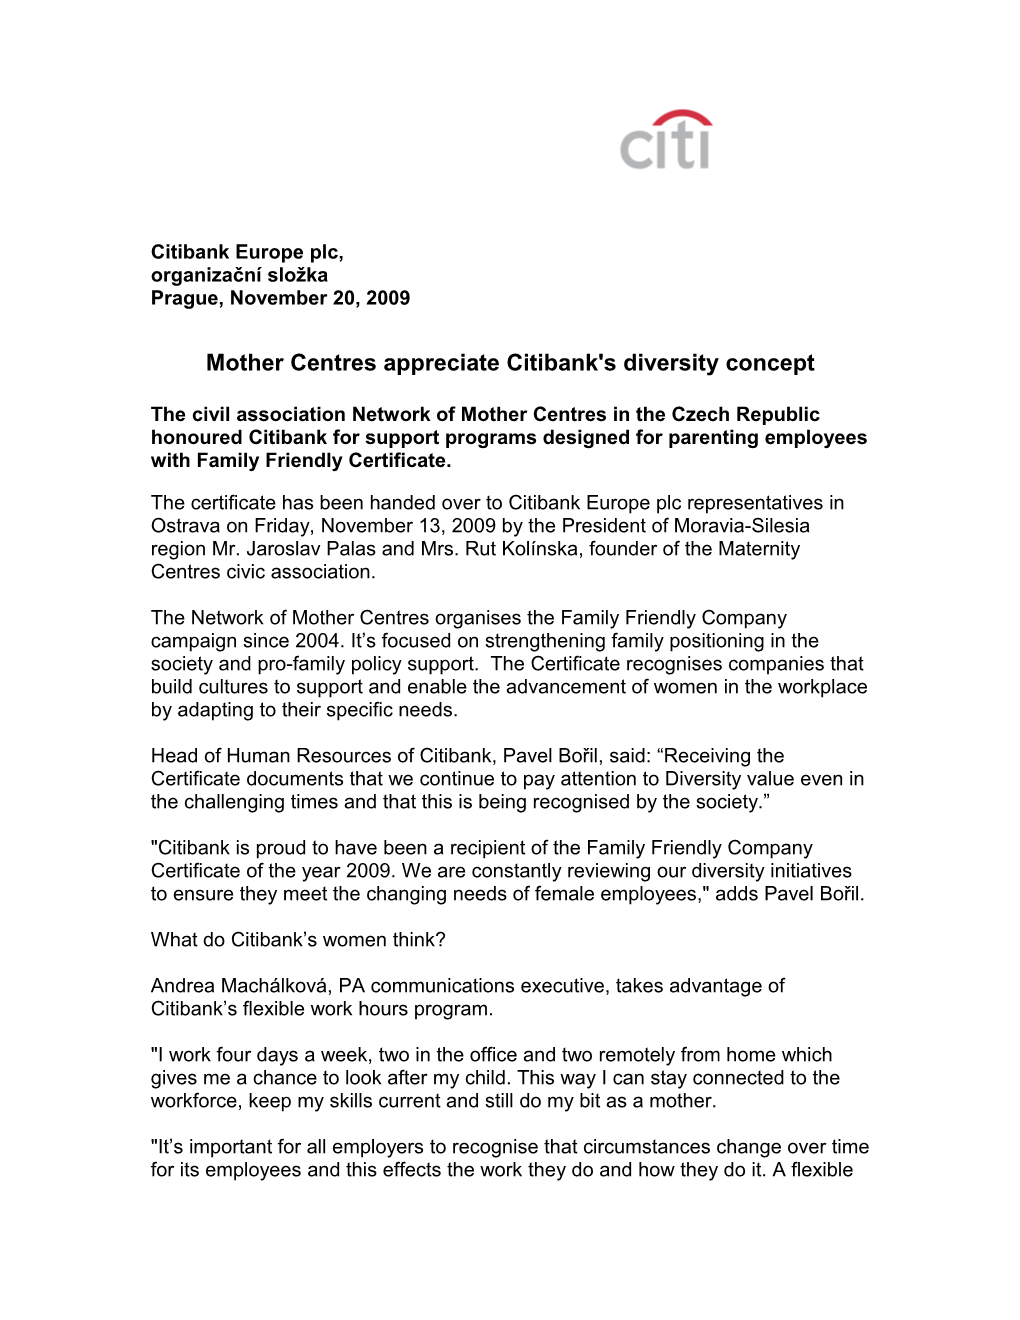 Mother Centres Appreciate Citibank's Diversity Concept